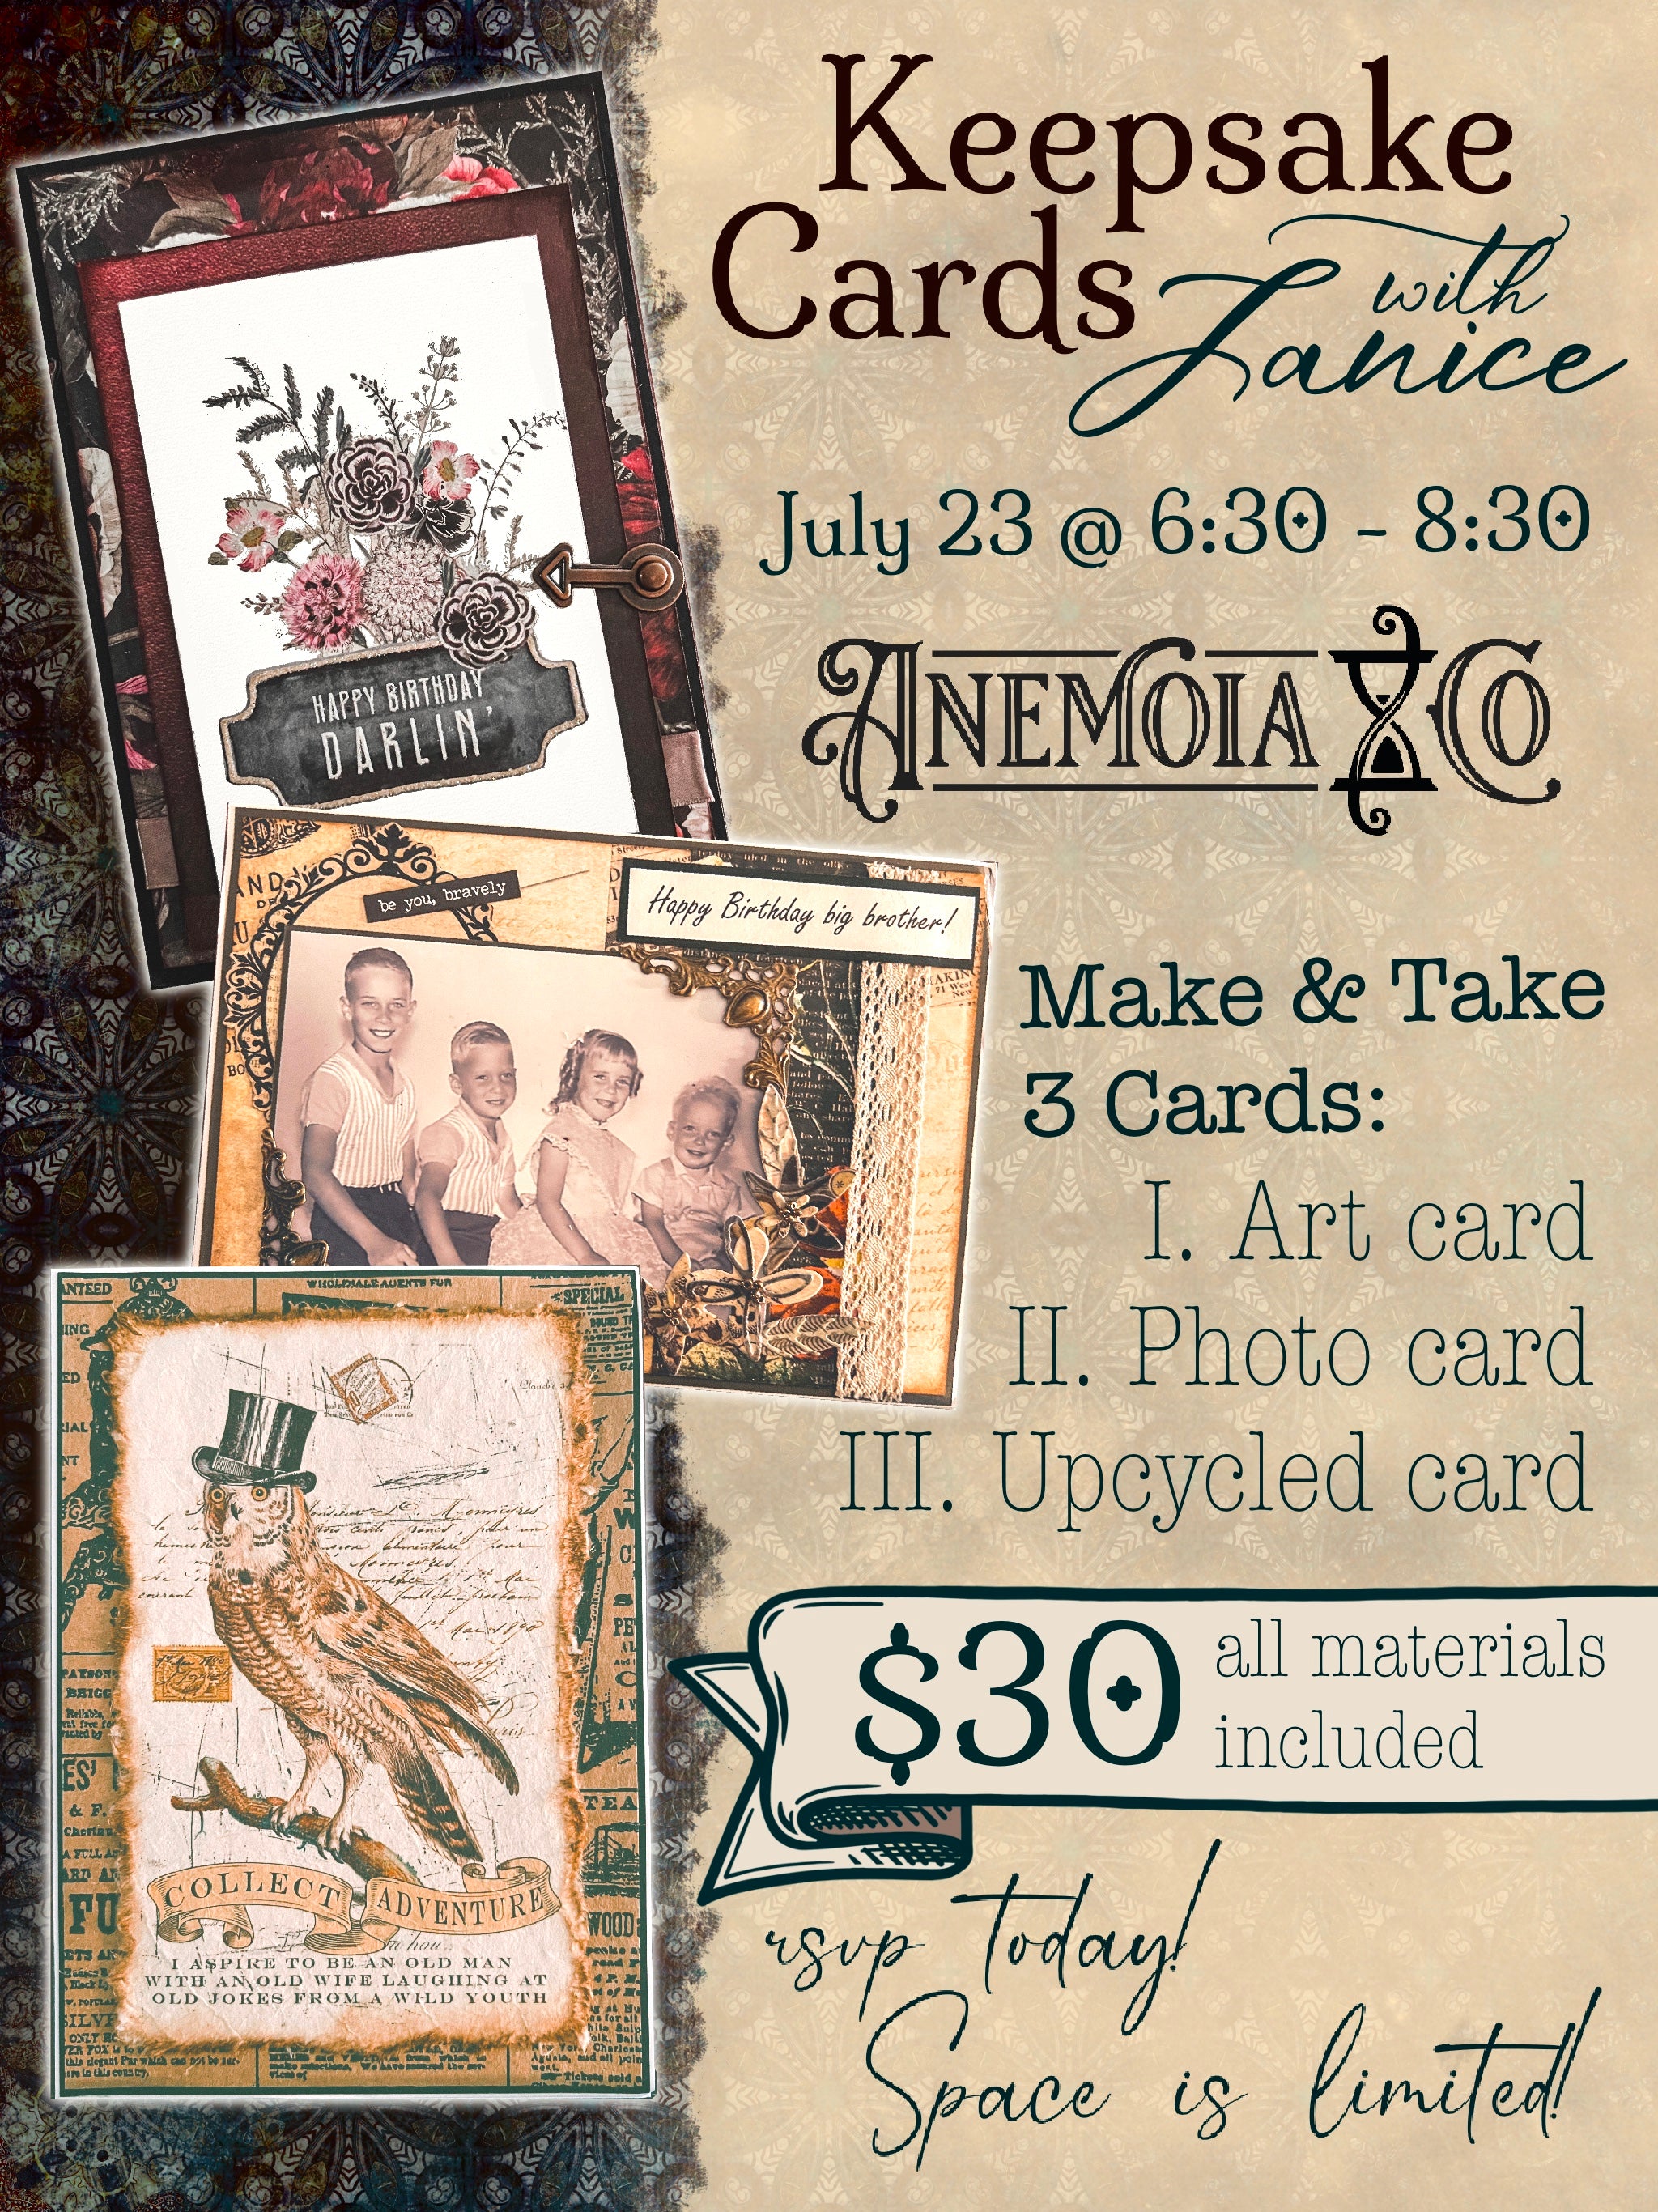 Keepsake Cards with Janice | July 23 @ 6:30 - 8:30